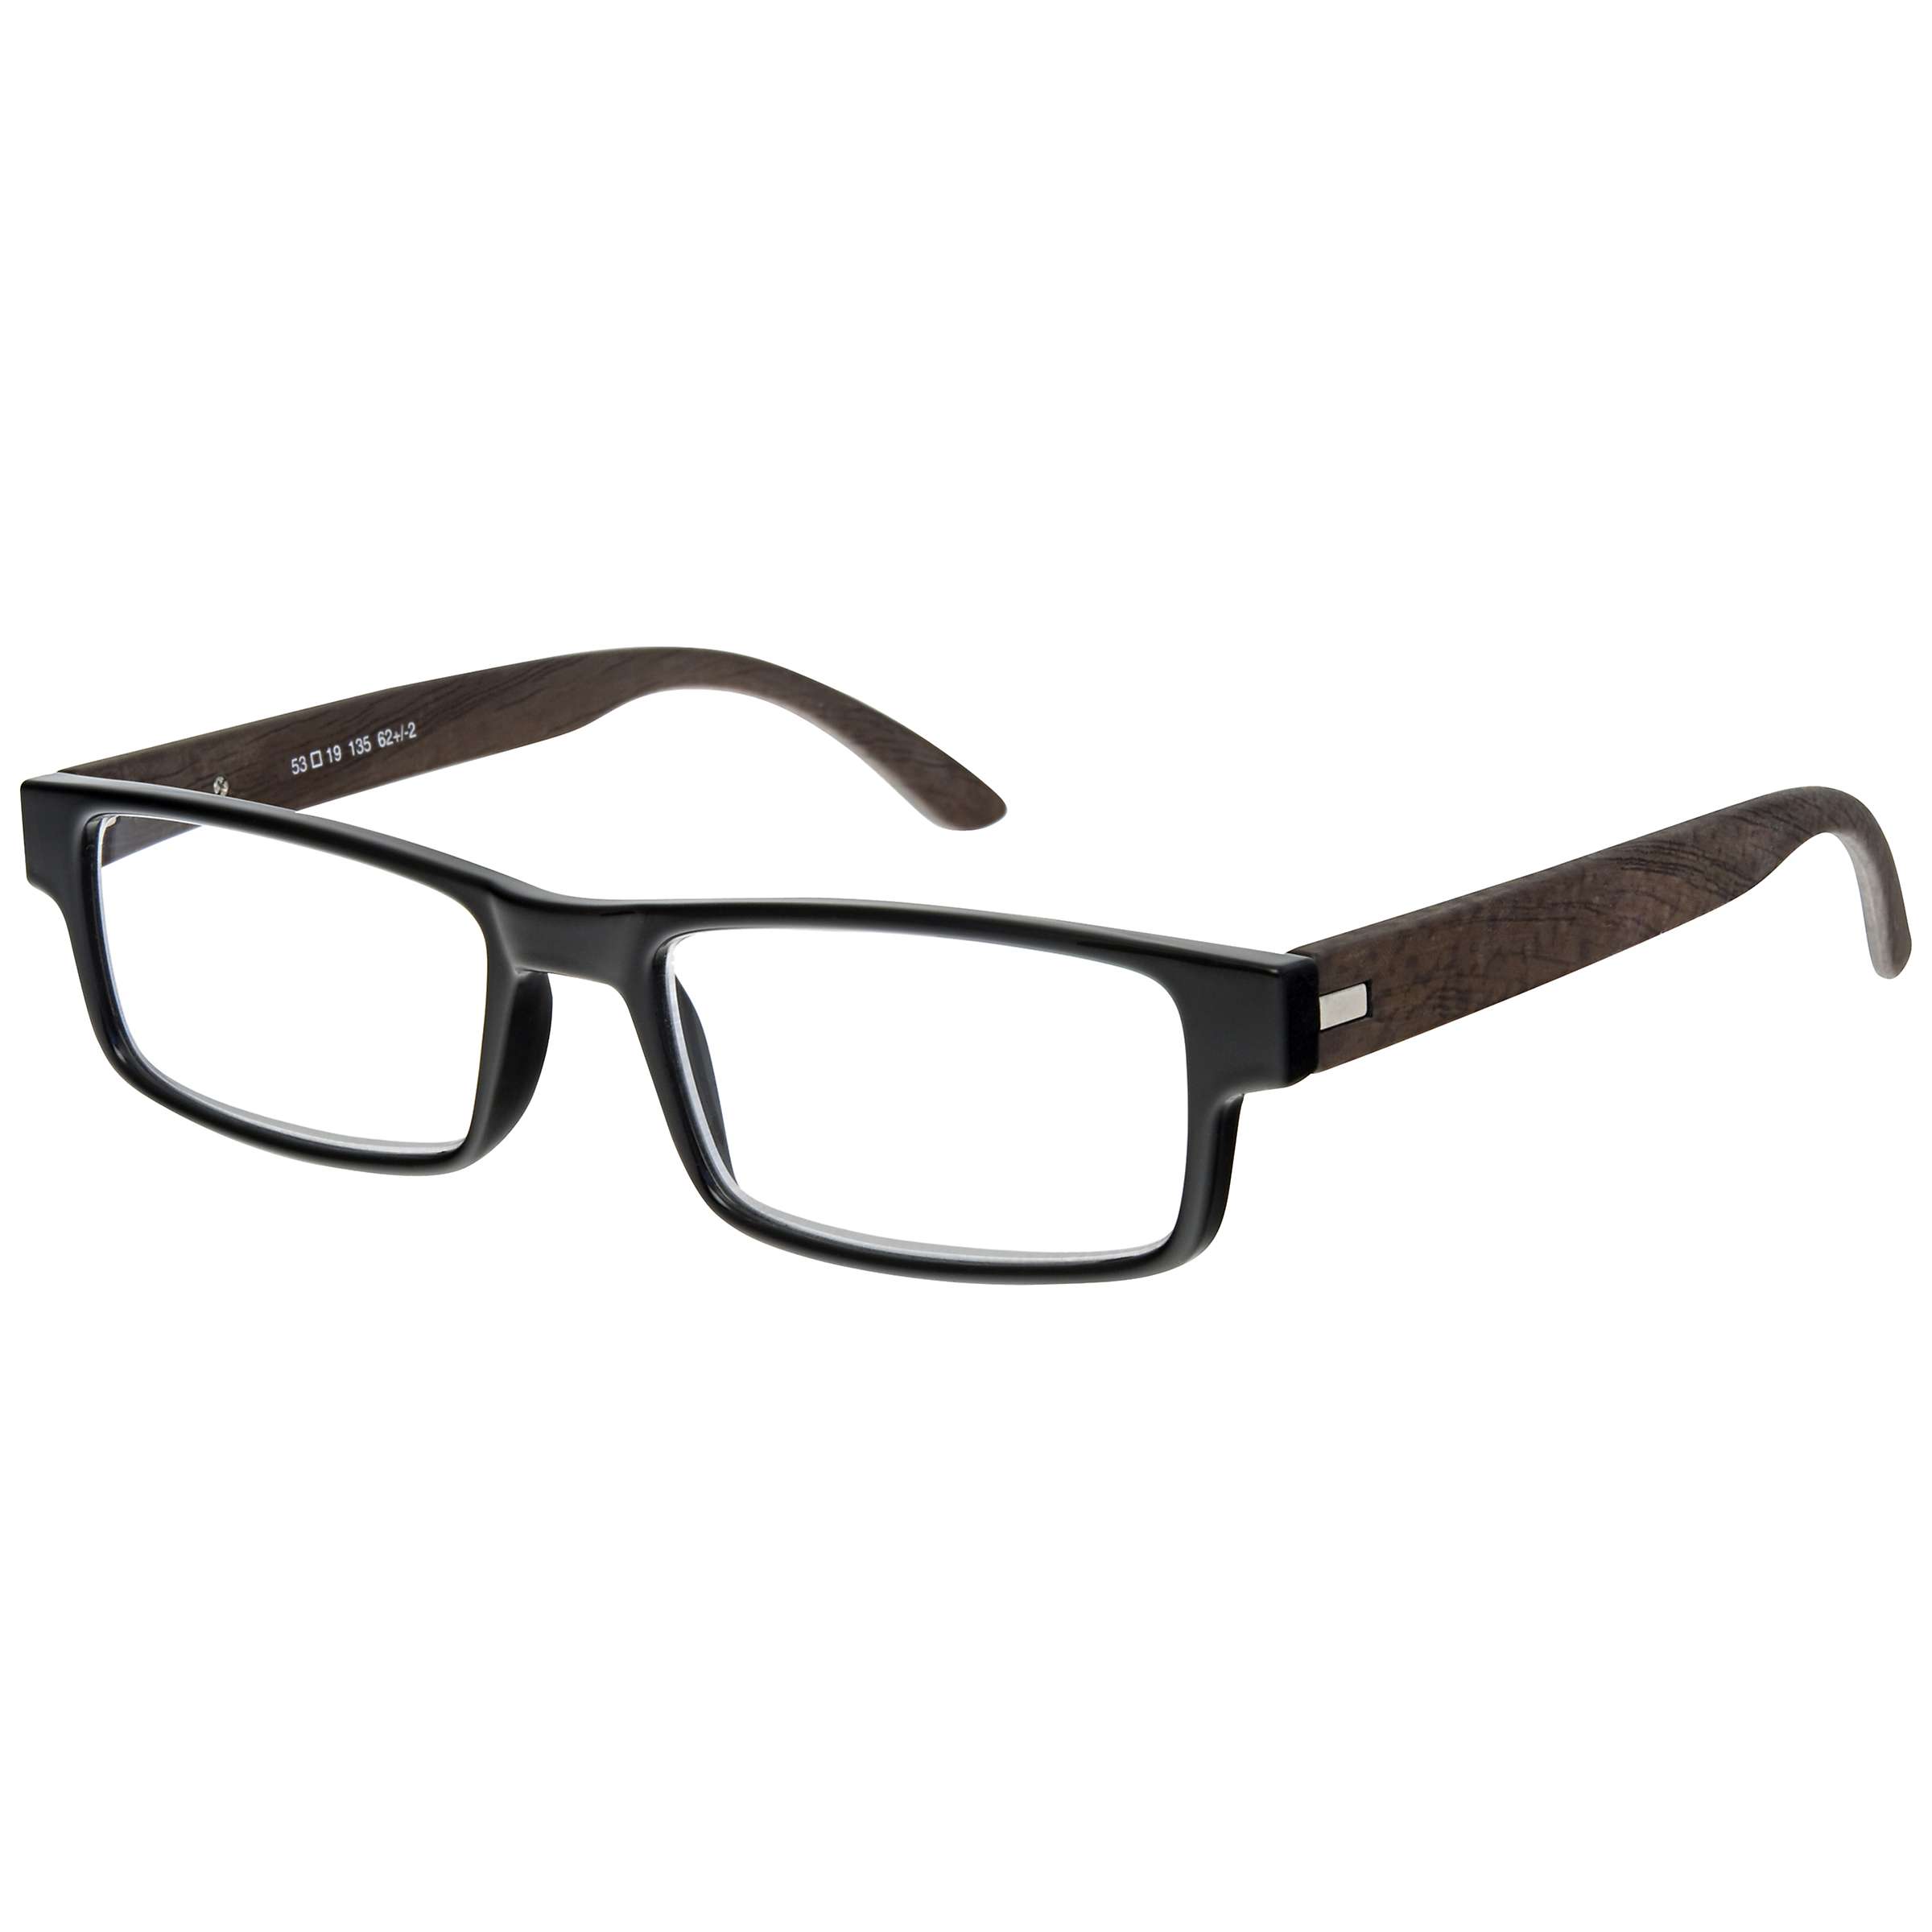 Buy Magnif Eyes Unisex Average Fit Ready Readers Oakland Glasses, Ebony Online at johnlewis.com